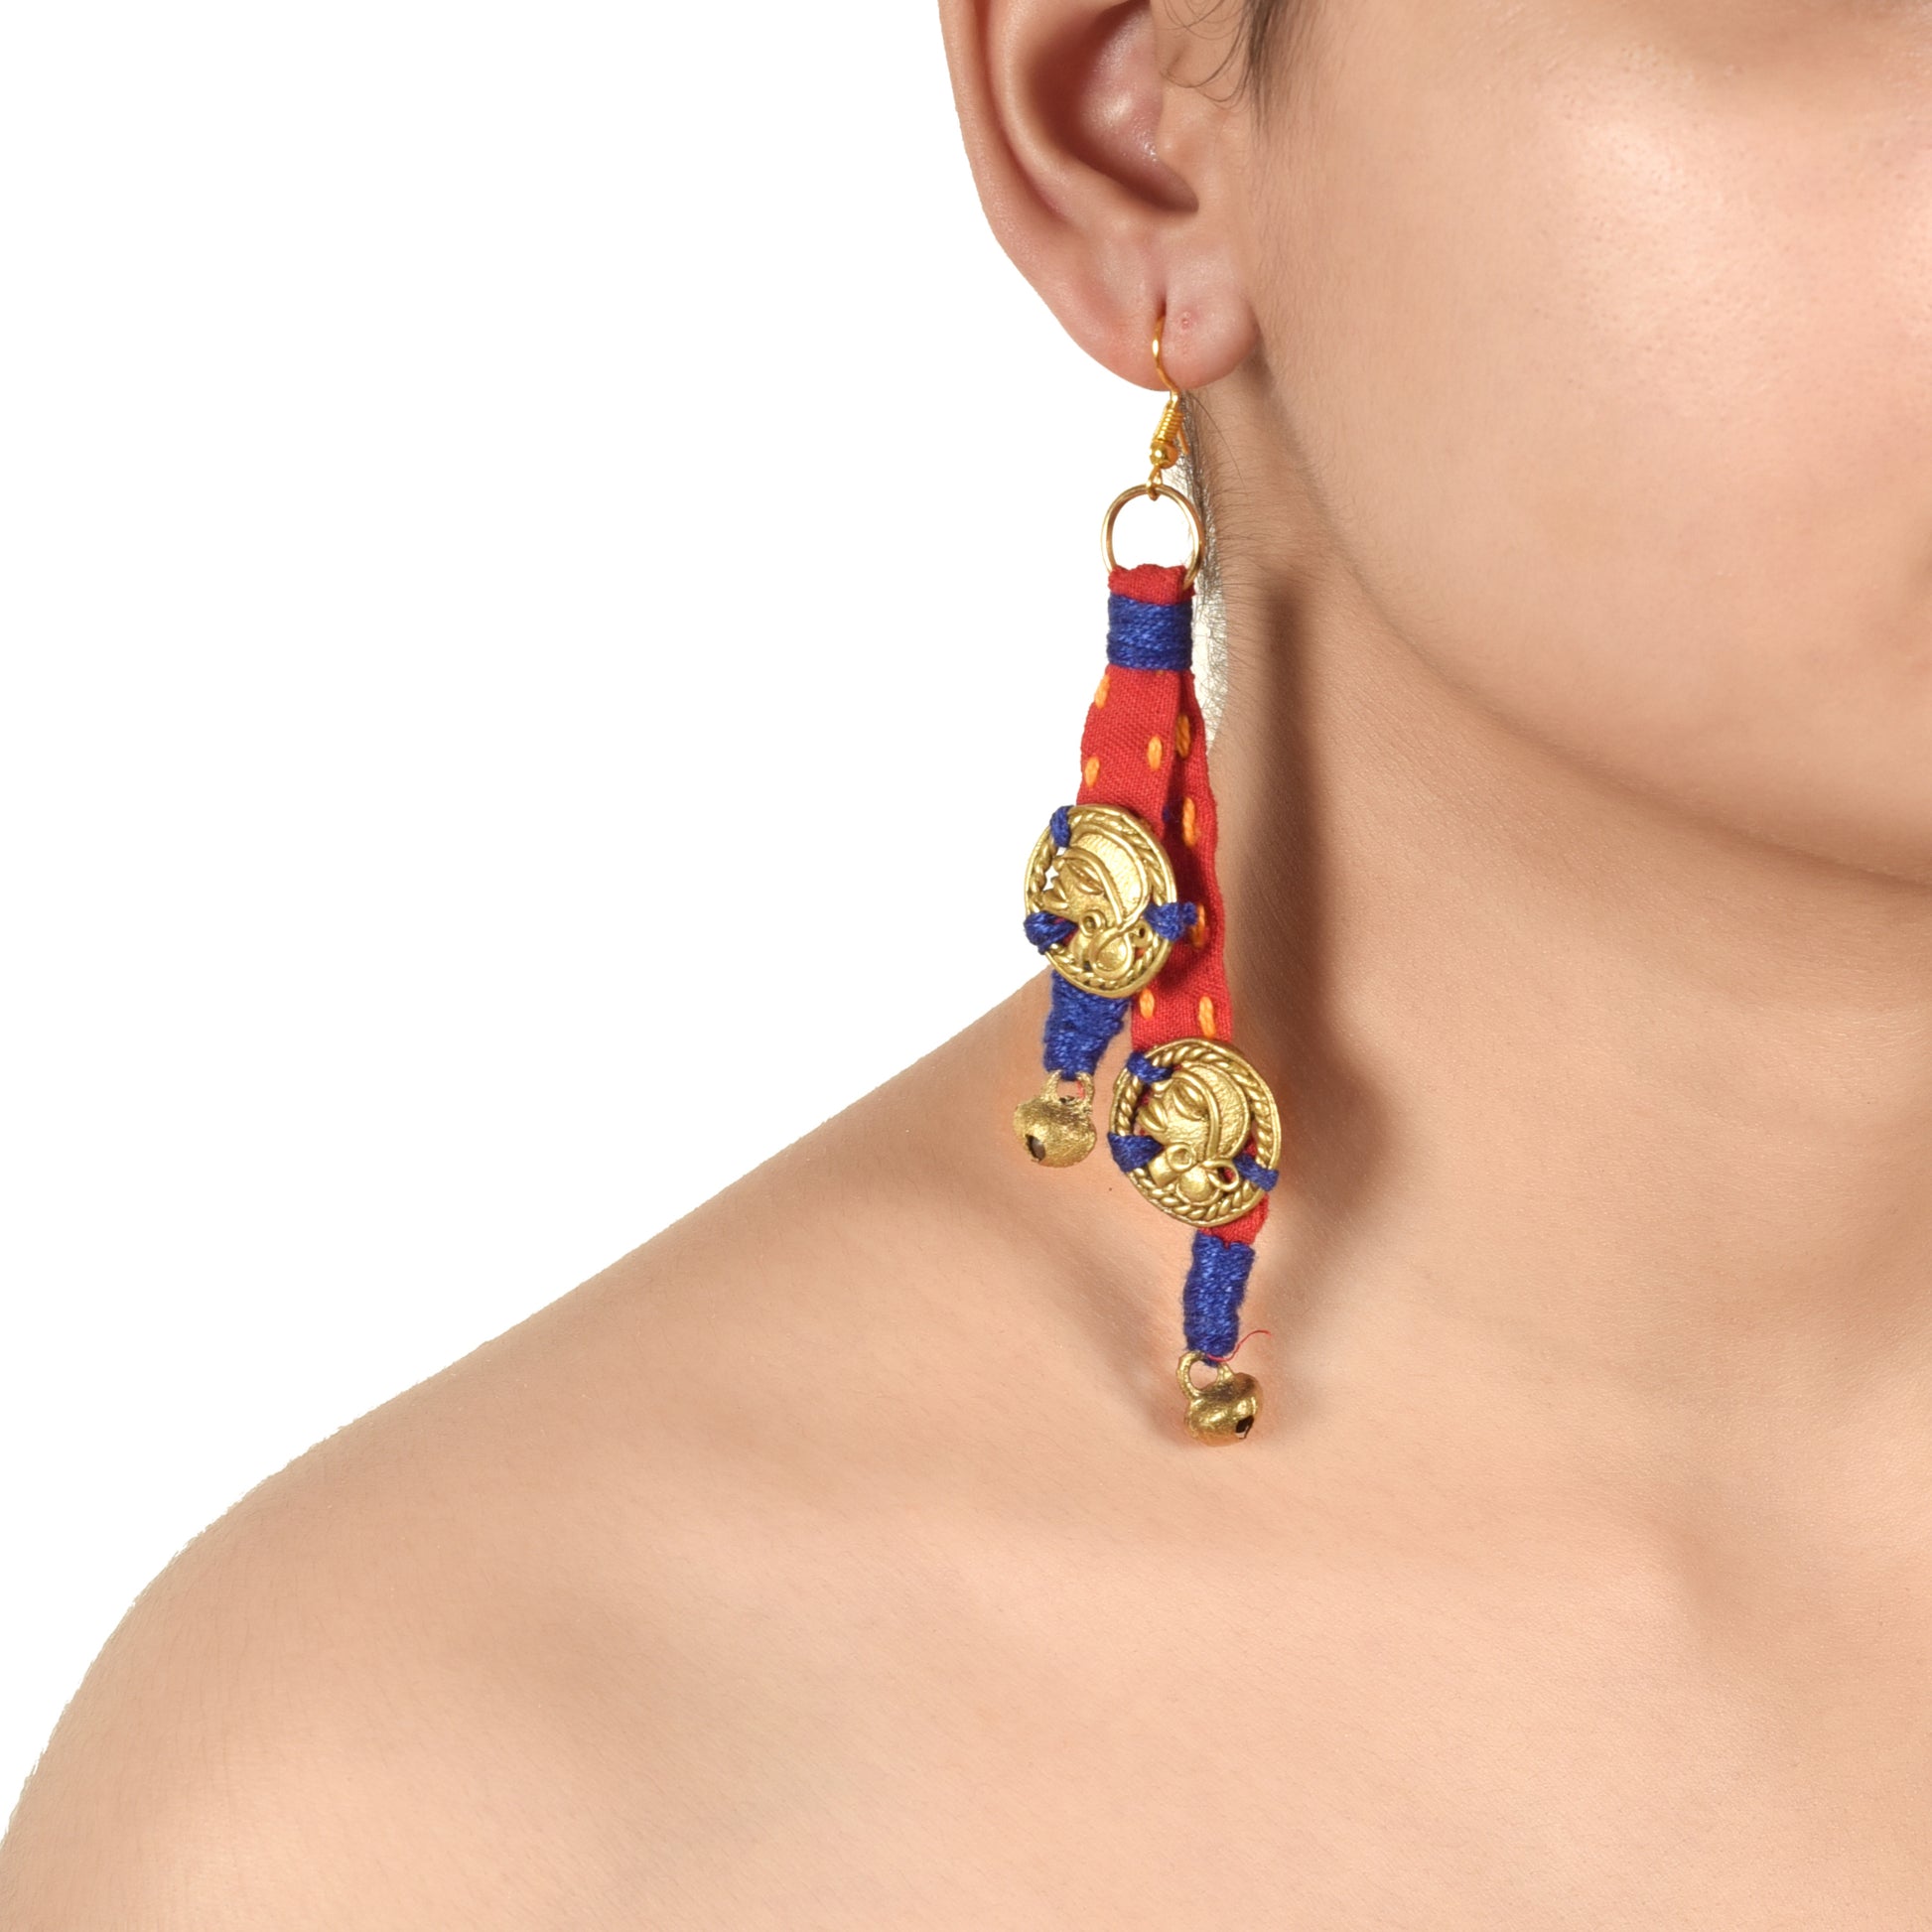 handcrafted earrings